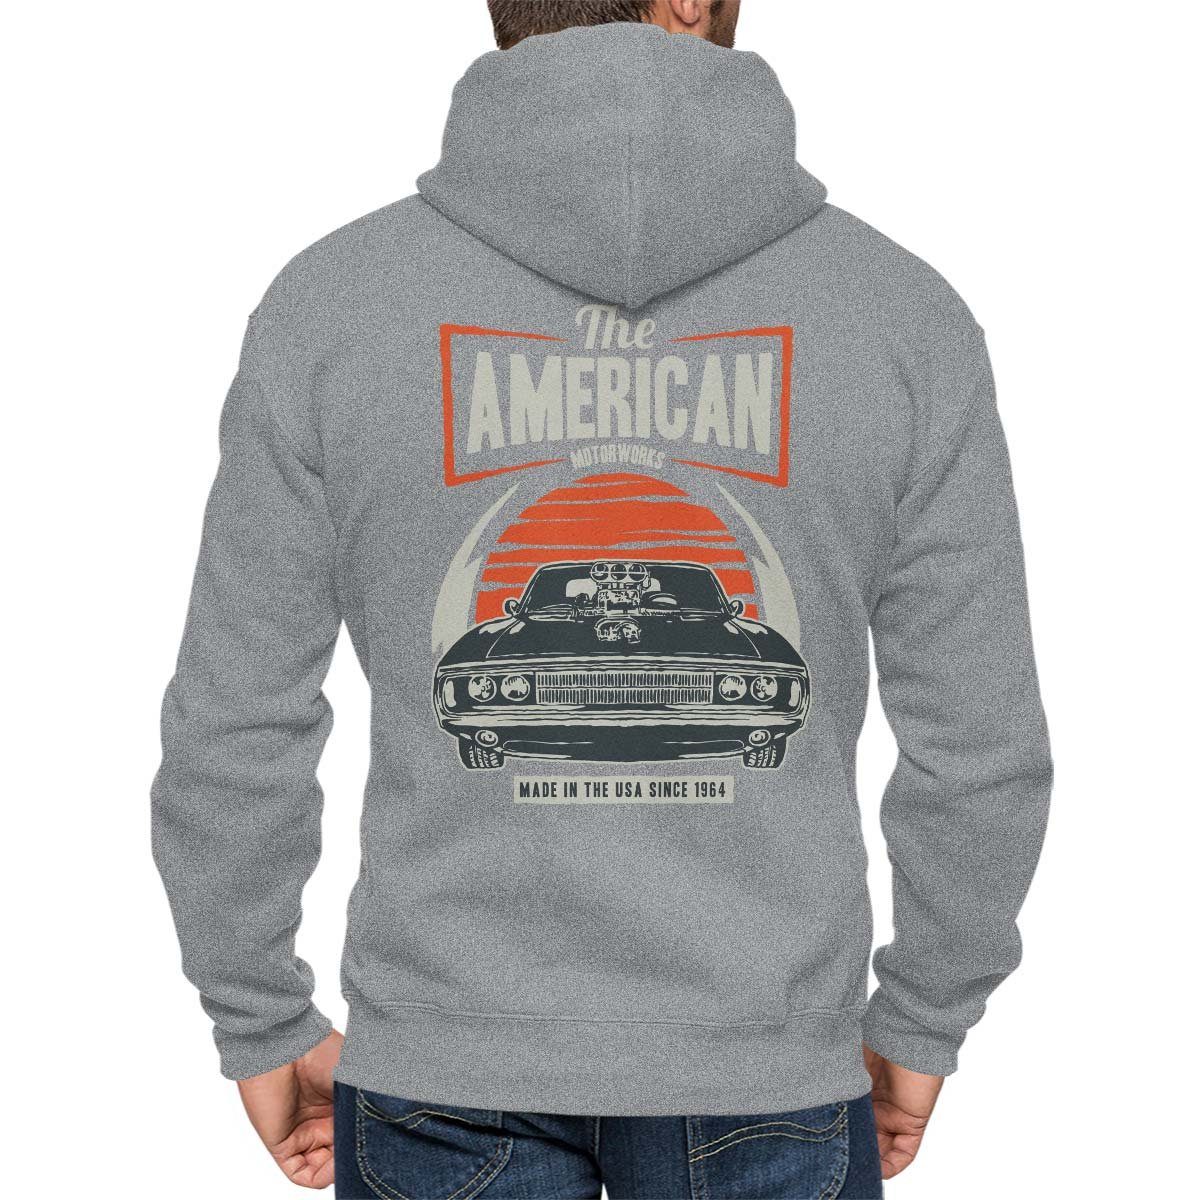 Rebel On Wheels Kapuzensweatjacke Kapuzenjacke Zip Hoodie The American mit Auto / US-Car Motiv Grau Melange